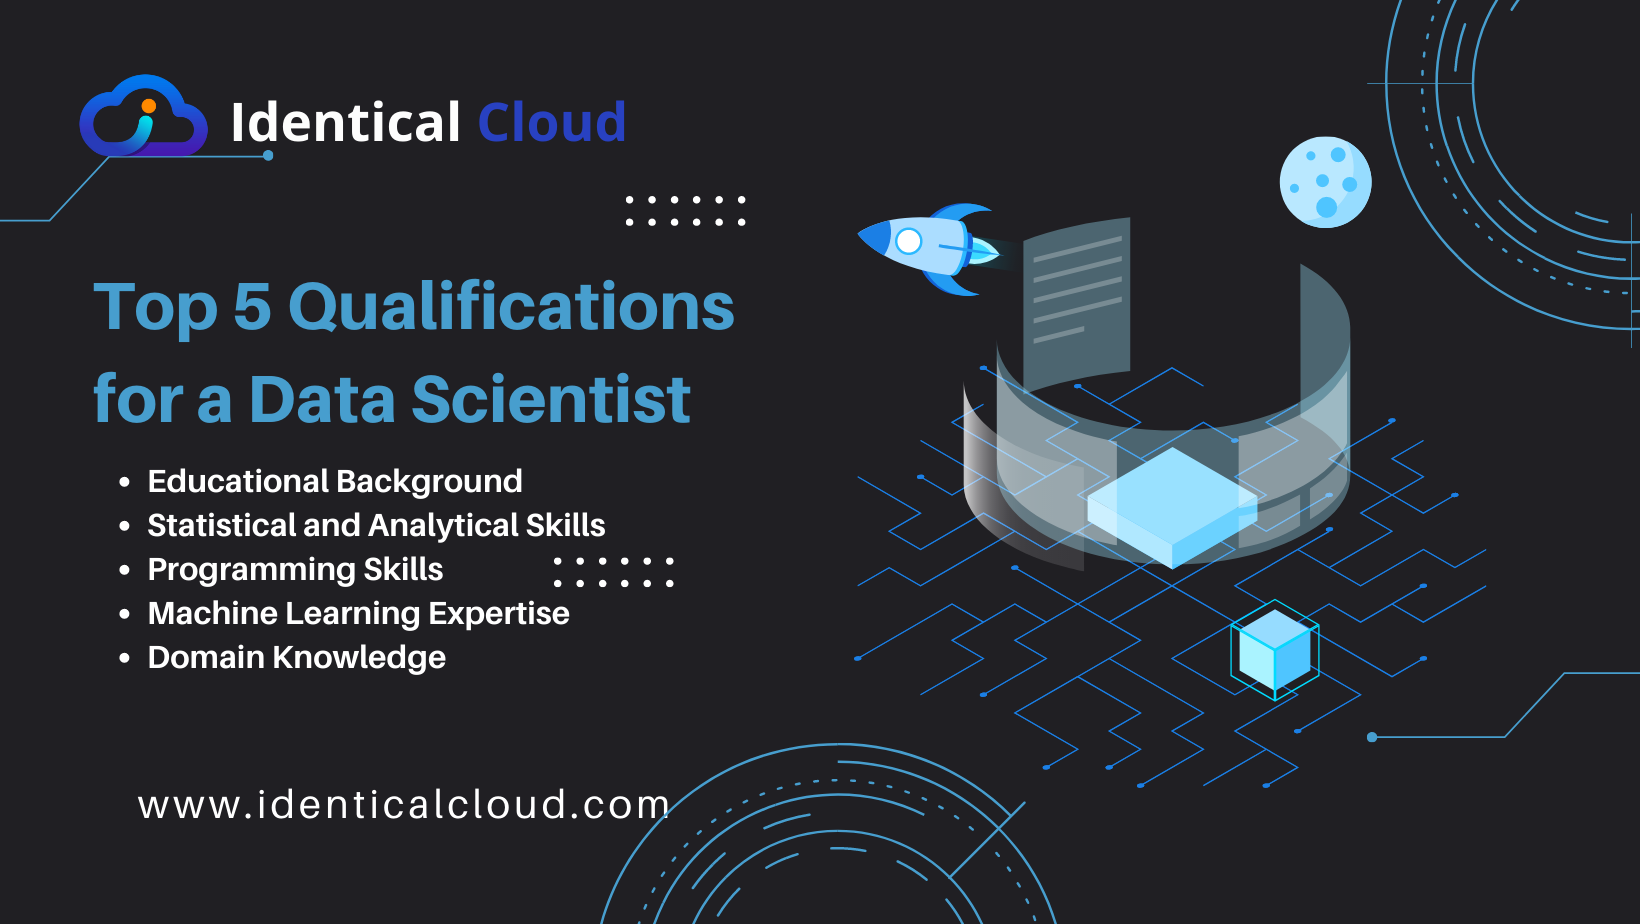 Top 5 Qualifications for a Data Scientist - identicalcloud.com